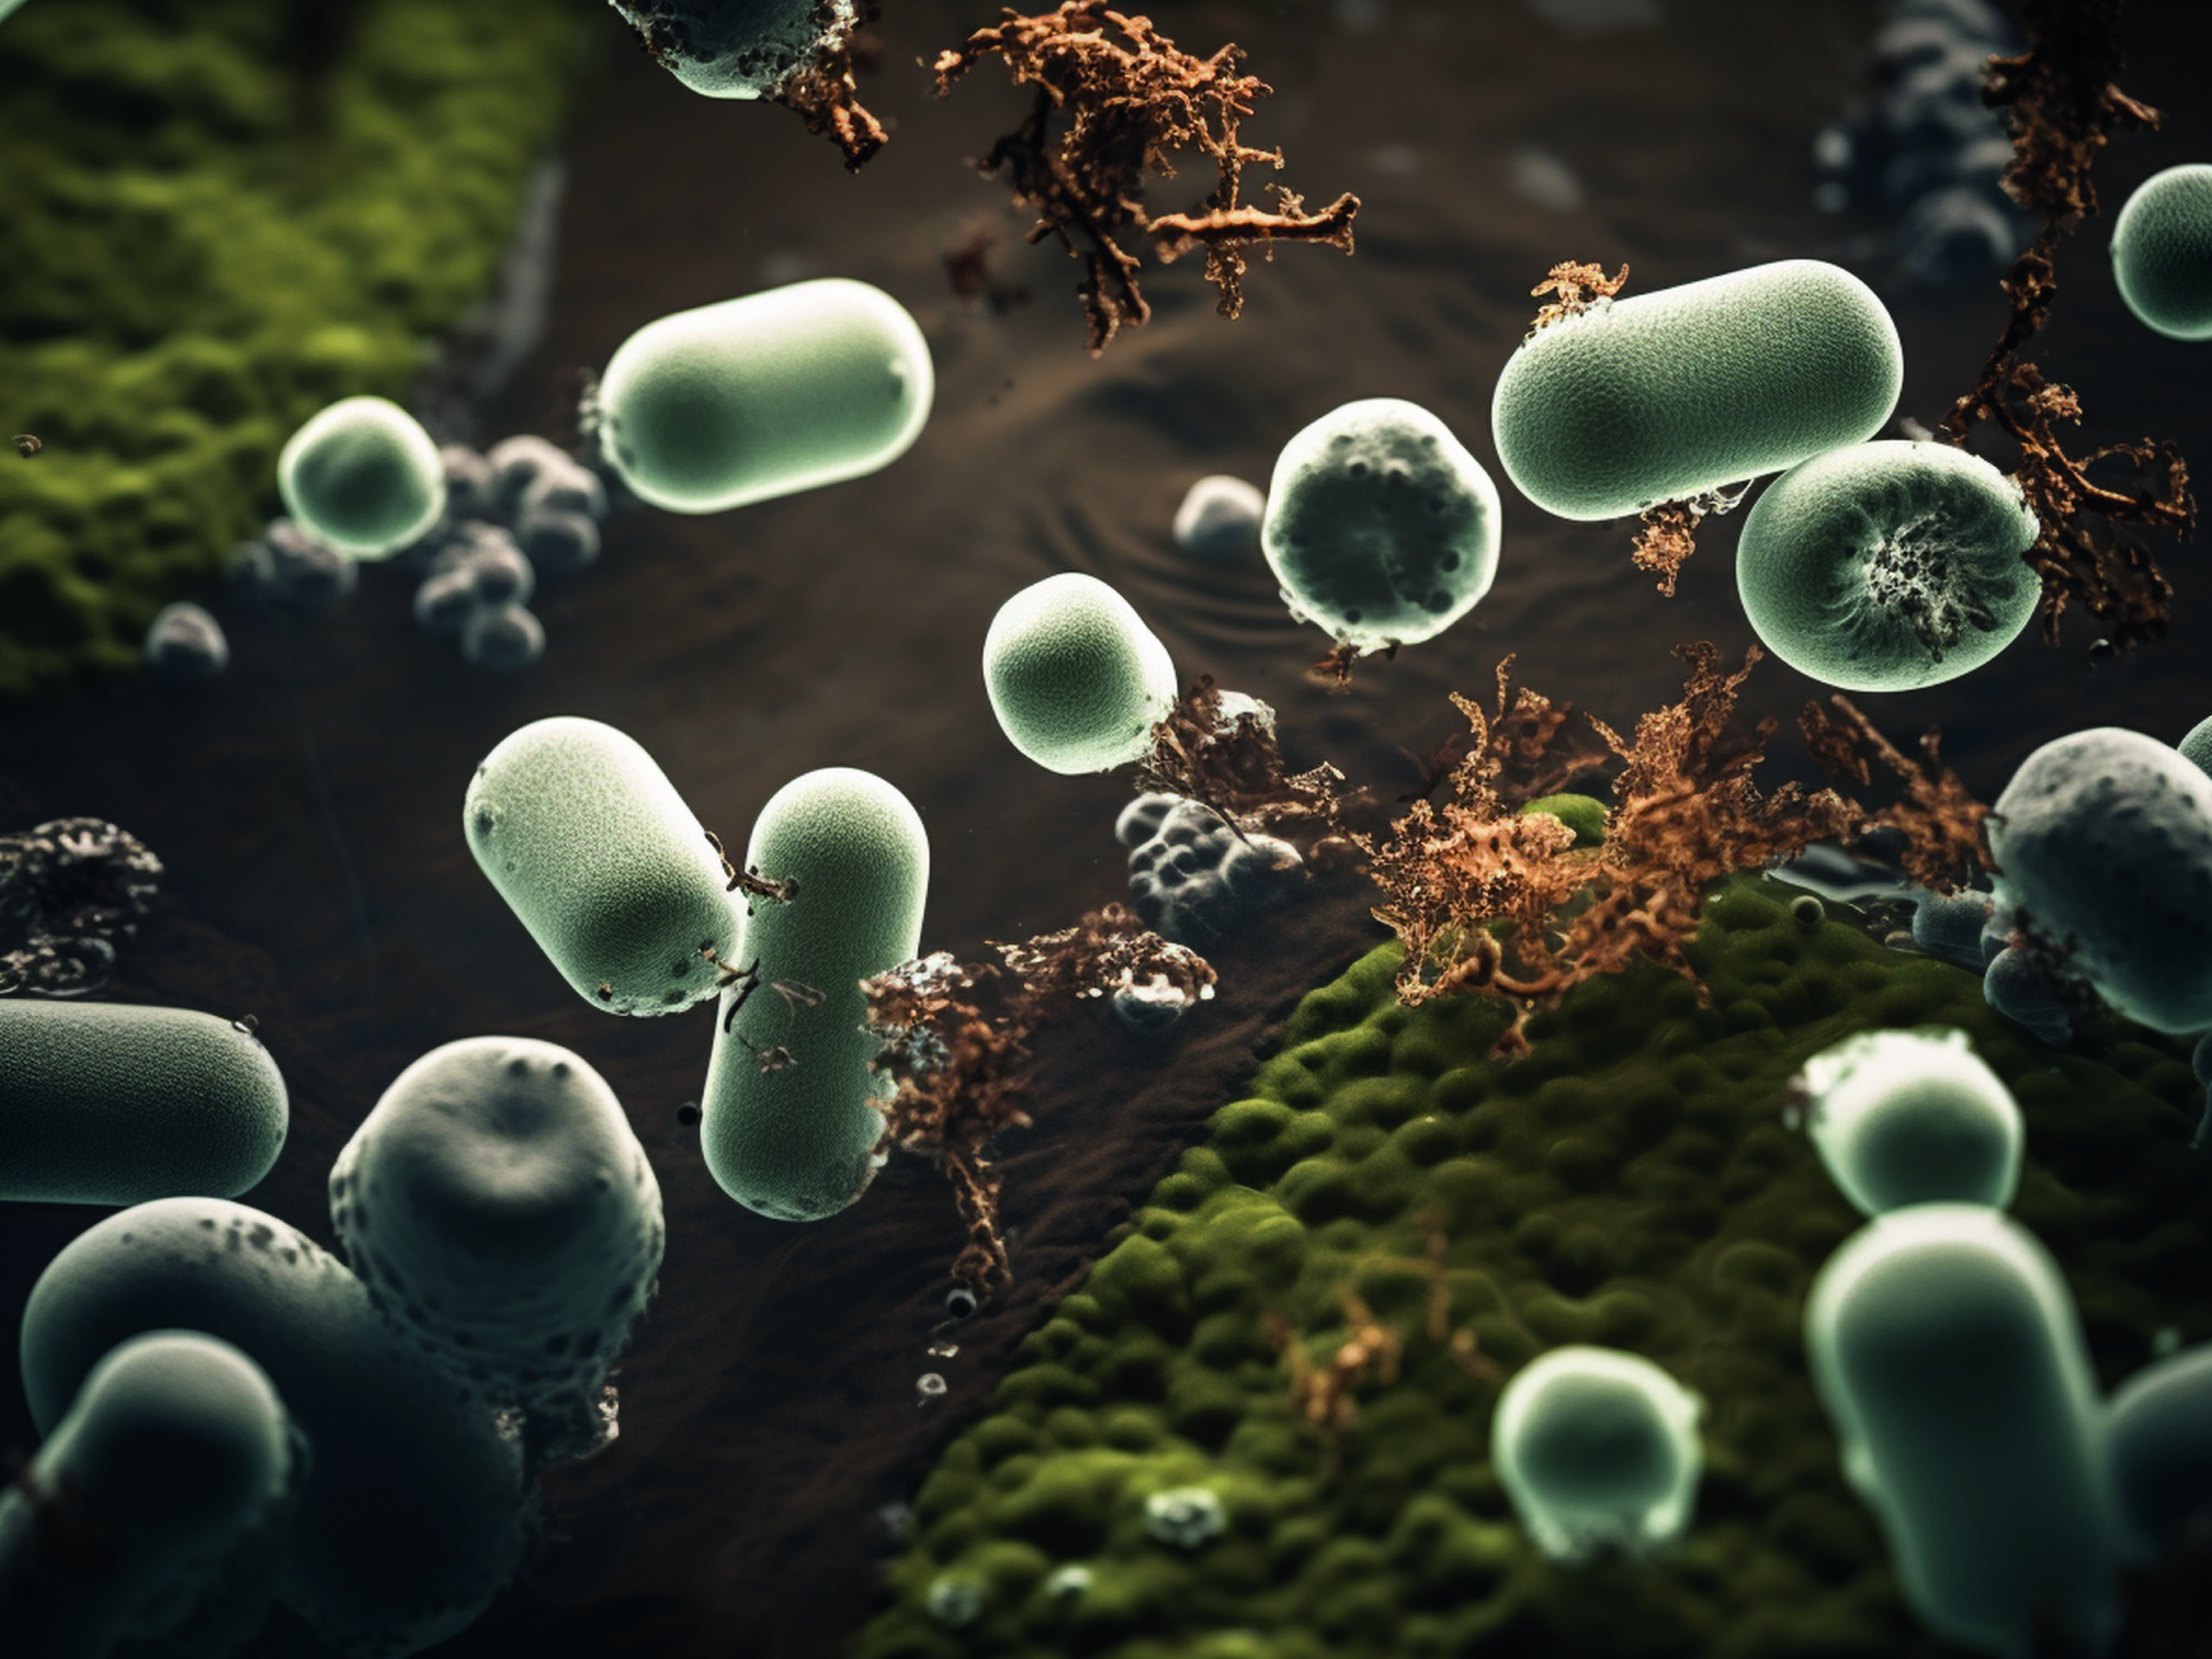 An image of bacteria breaking down organic matter